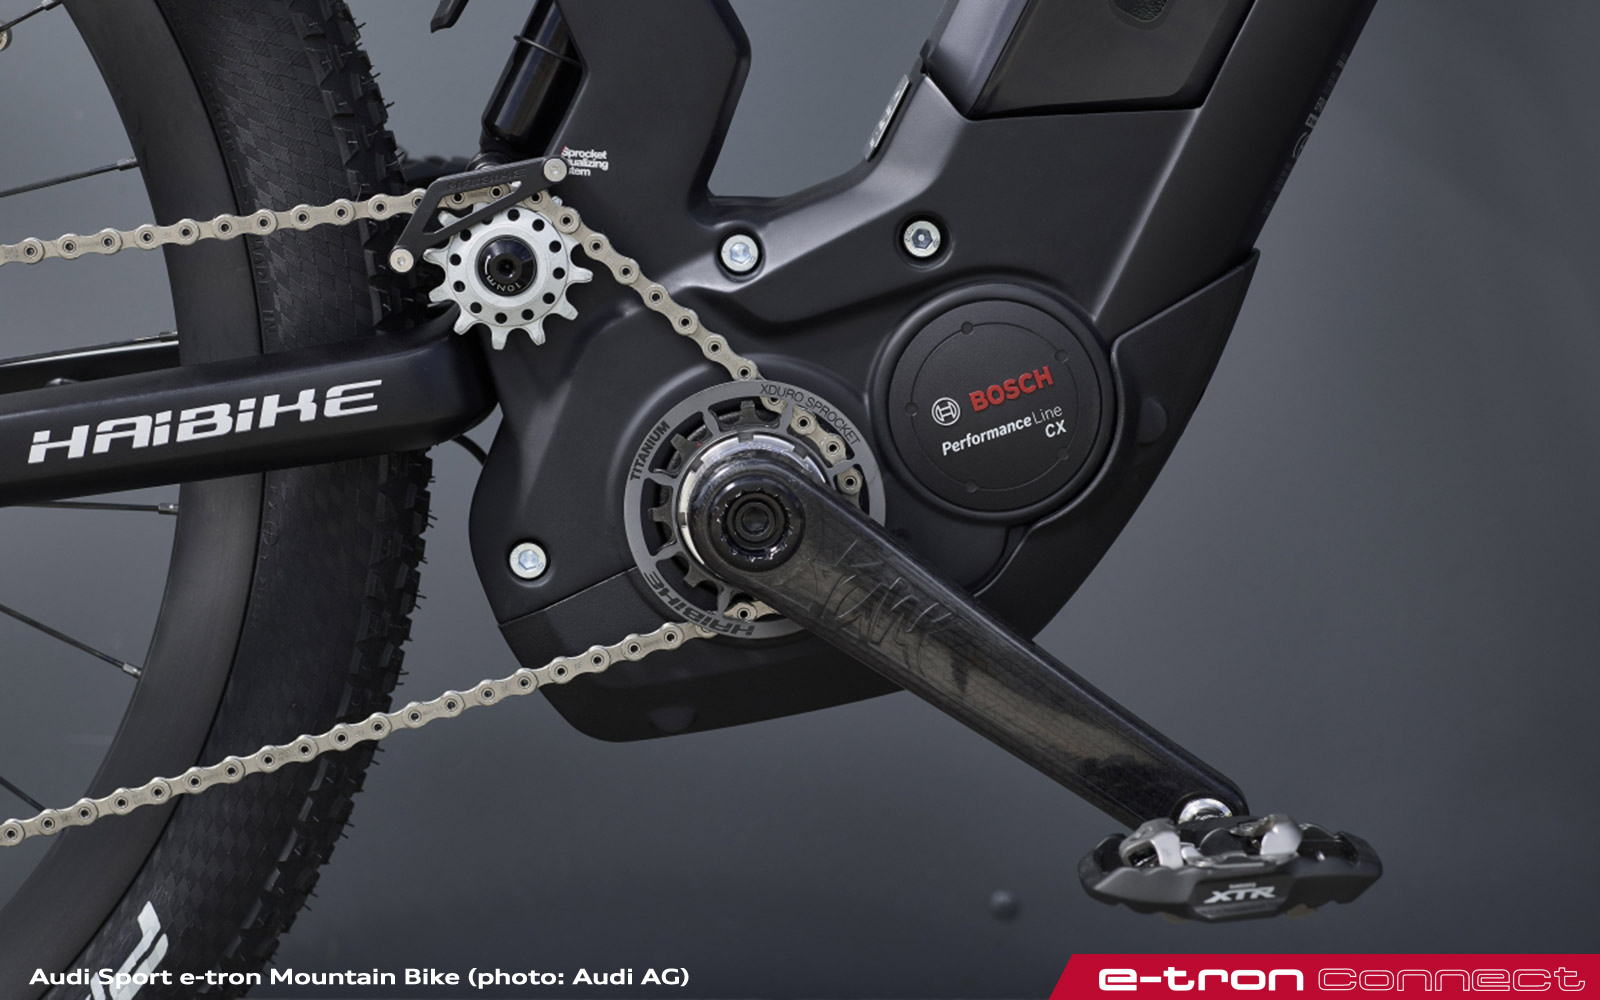 This Is the Audi Sport e-tron Mountain Bike - e-tron connect